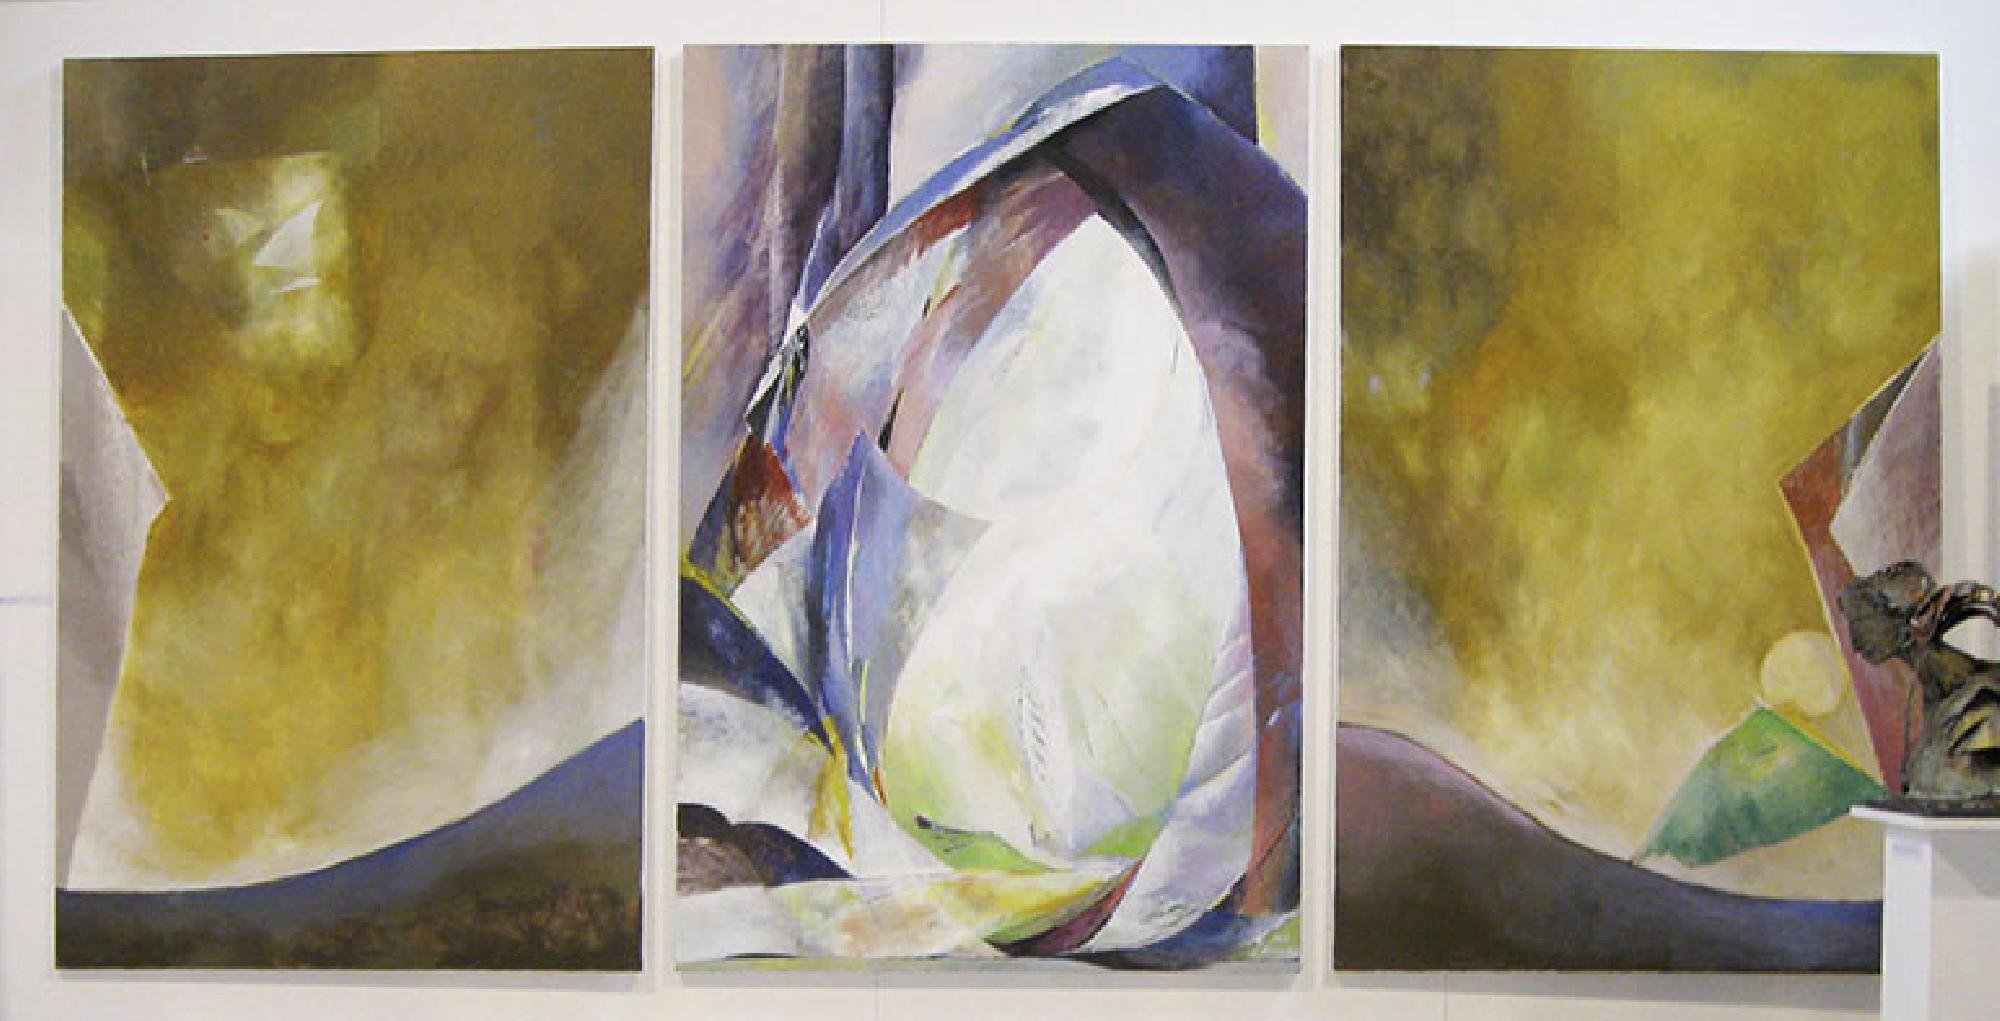 Leonard Lorenz: Tryptychon
2011
290 × 570
Oil on canvas